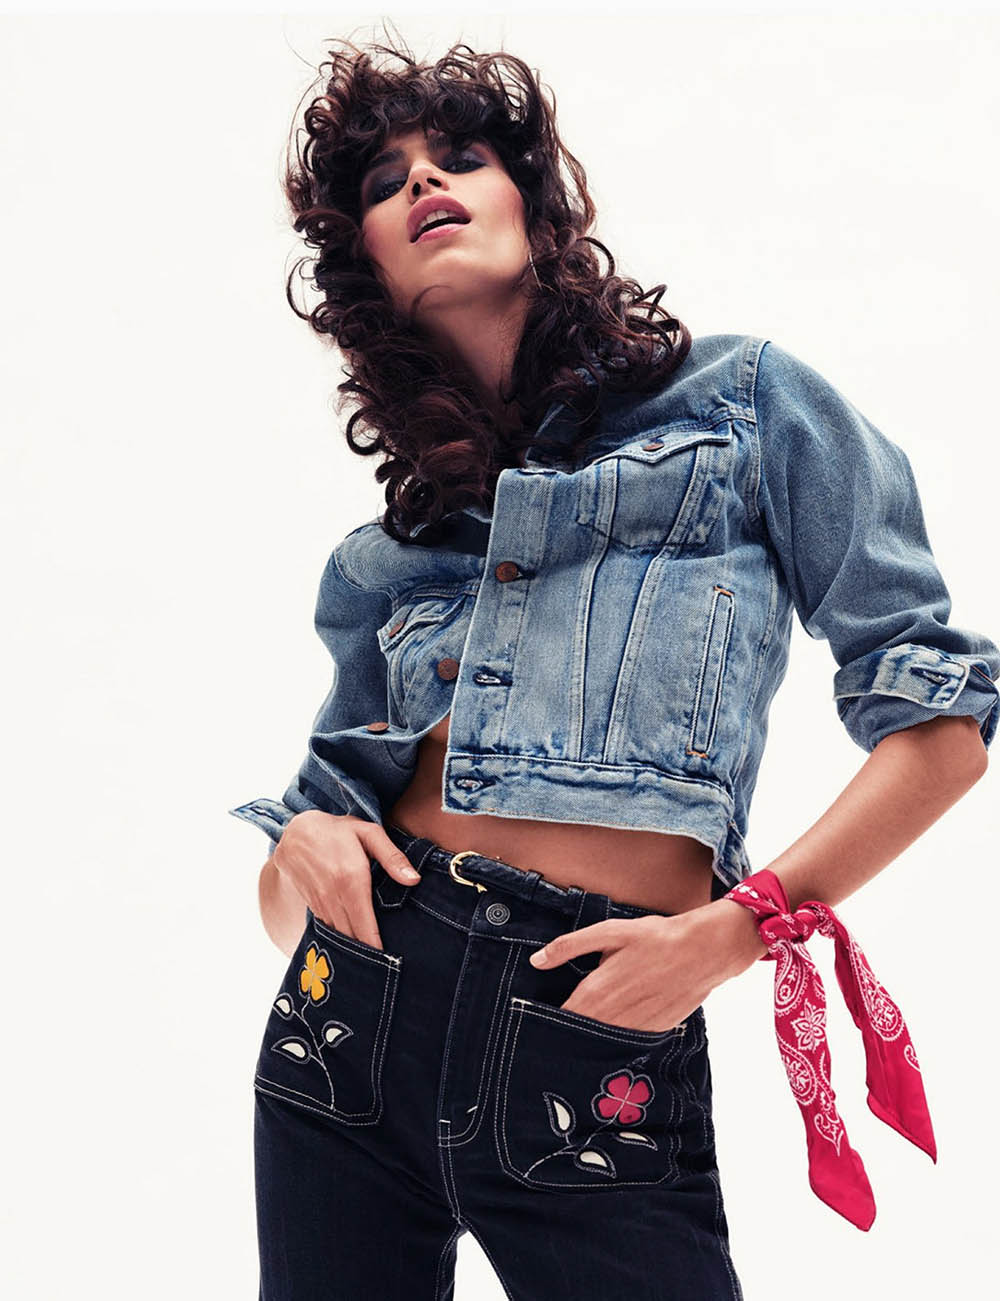 Mica Argañaraz covers Vogue Paris July 2020 by Nathaniel Goldberg